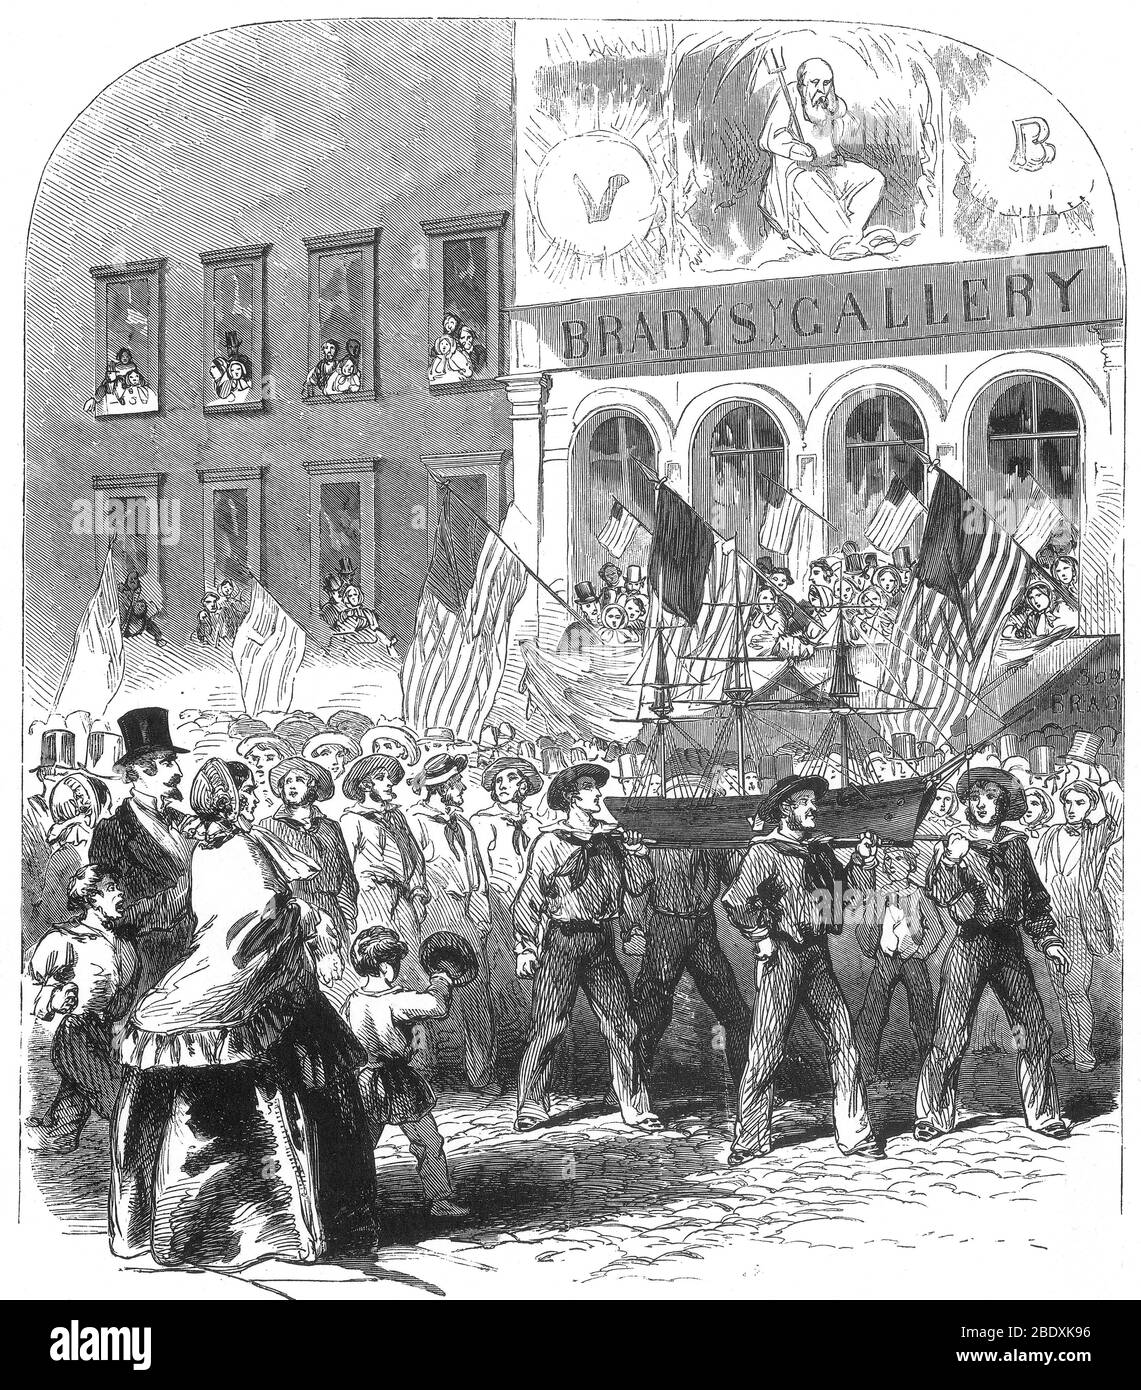 Atlantic Cable Parade, 1858 Stock Photo